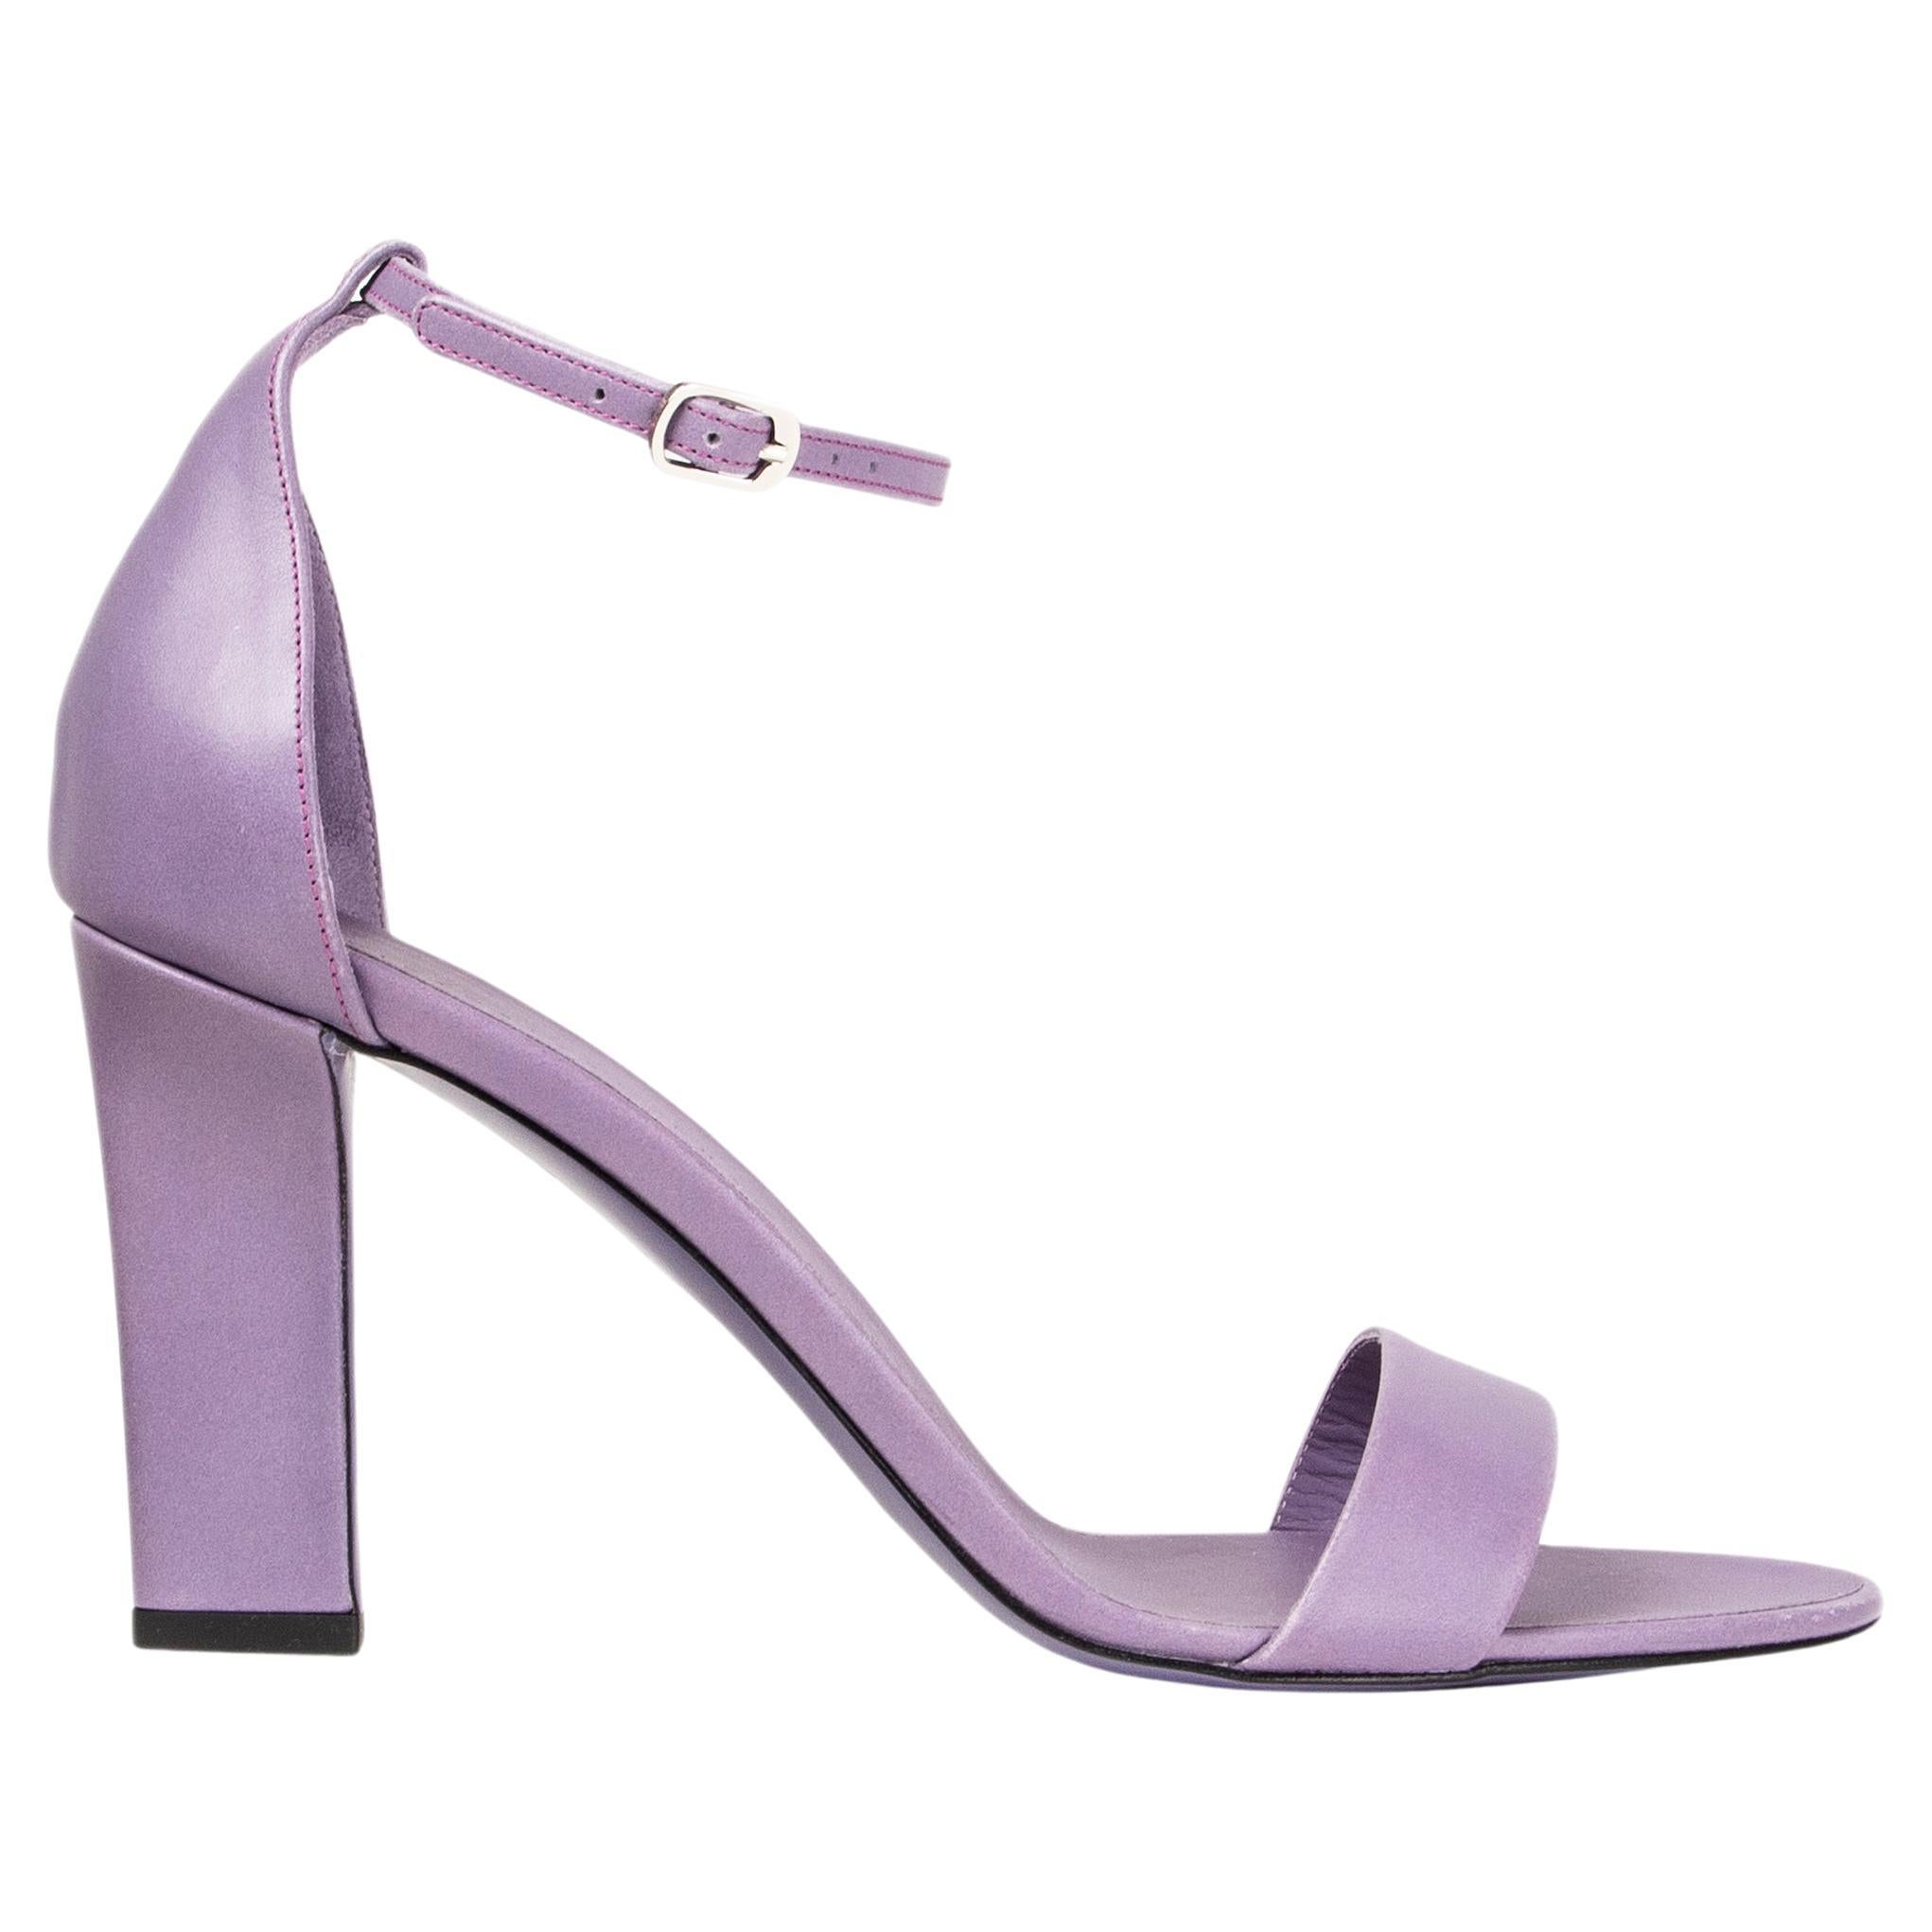 VICTORIA BECKHAM lavender leather ANNA ANKLE STRAP Sandals Shoes 39.5 For Sale